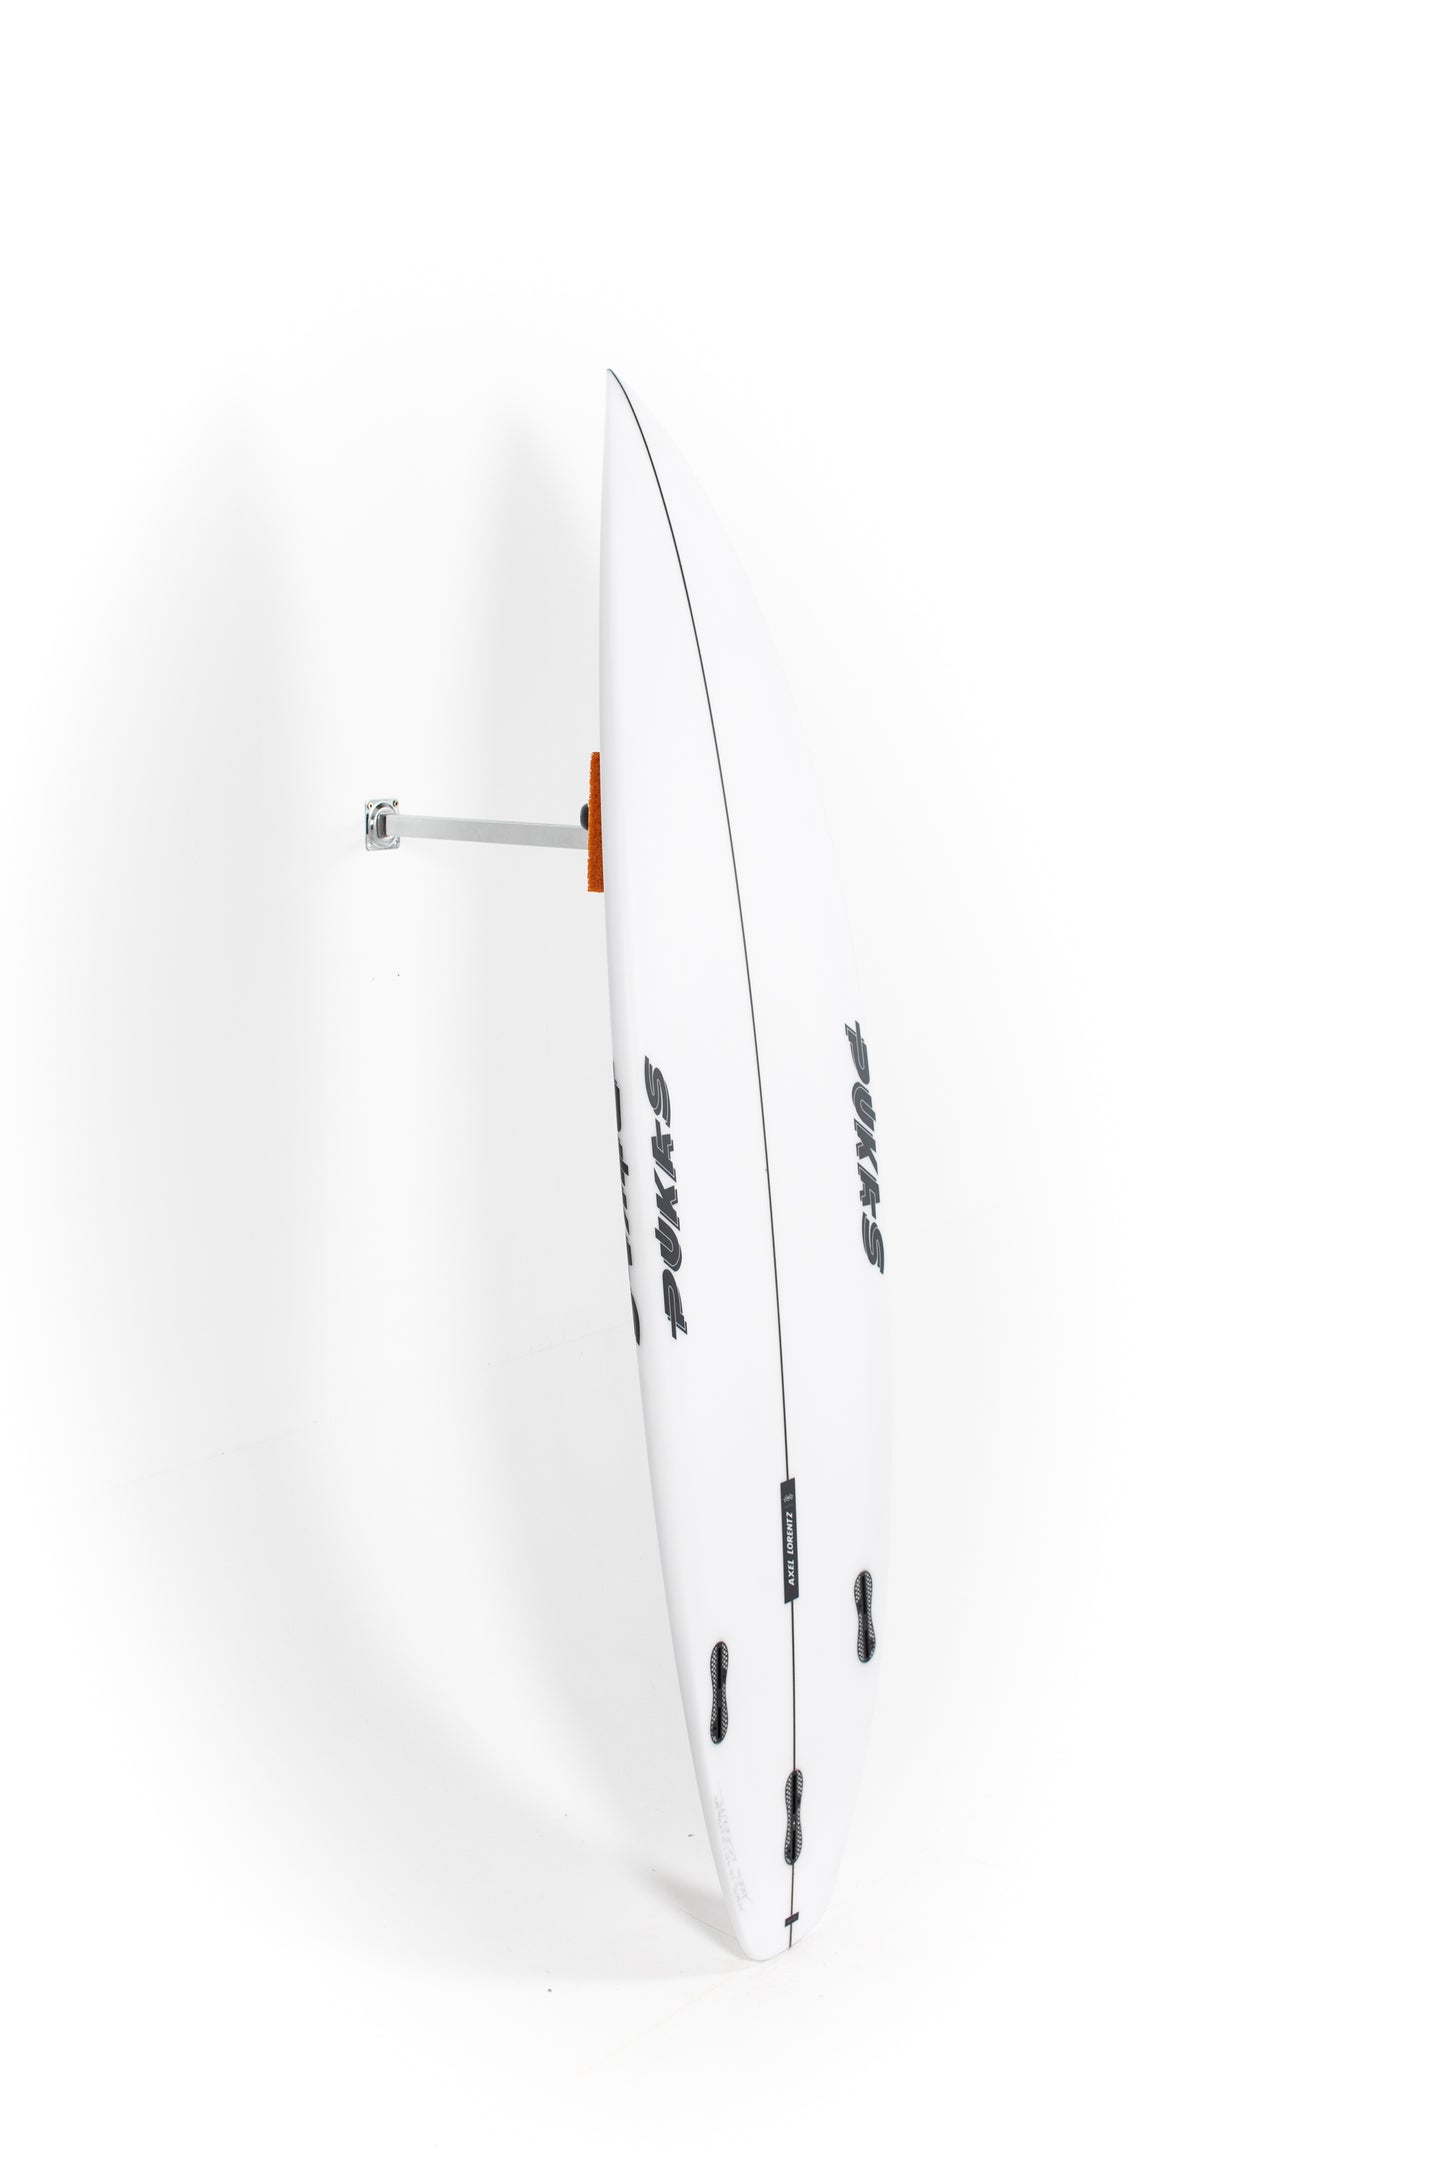 
                  
                    Pukas Surf Shop - Pukas Surfboard - DARKER by Axel Lorentz - 5'10" x 19,25 x 2,31 x 27,76L. - AX08692
                  
                